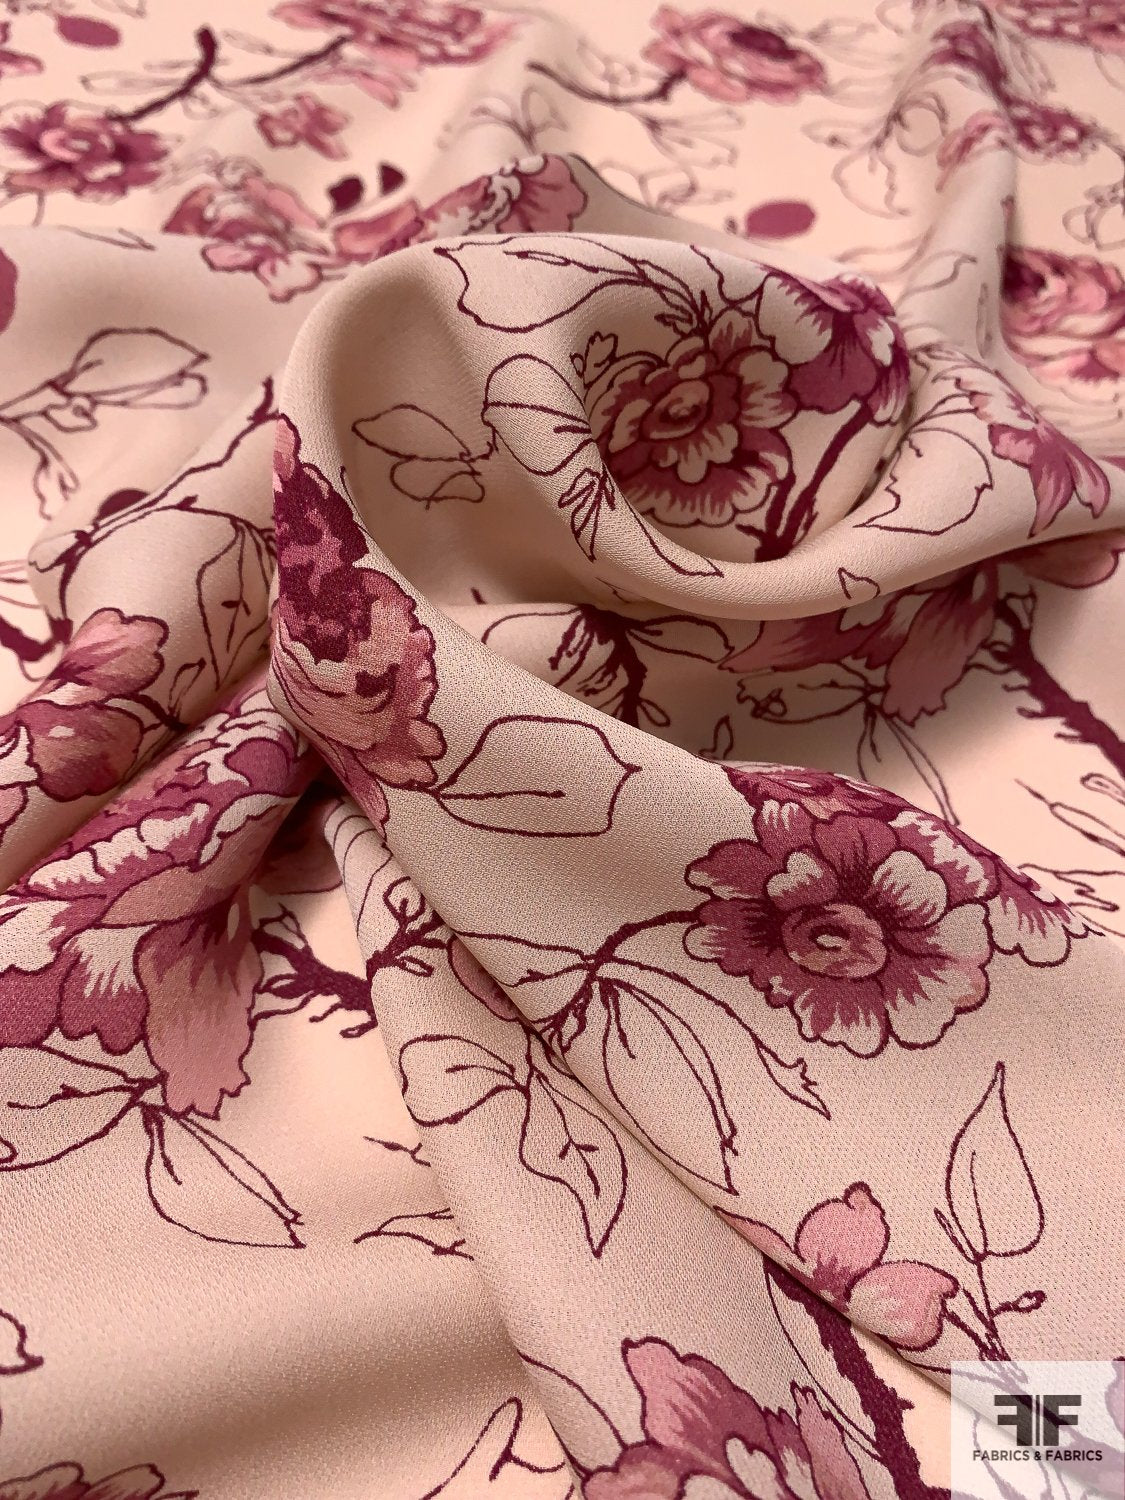 Floral Stems Printed Silk Georgette - Blush / Boysenberry